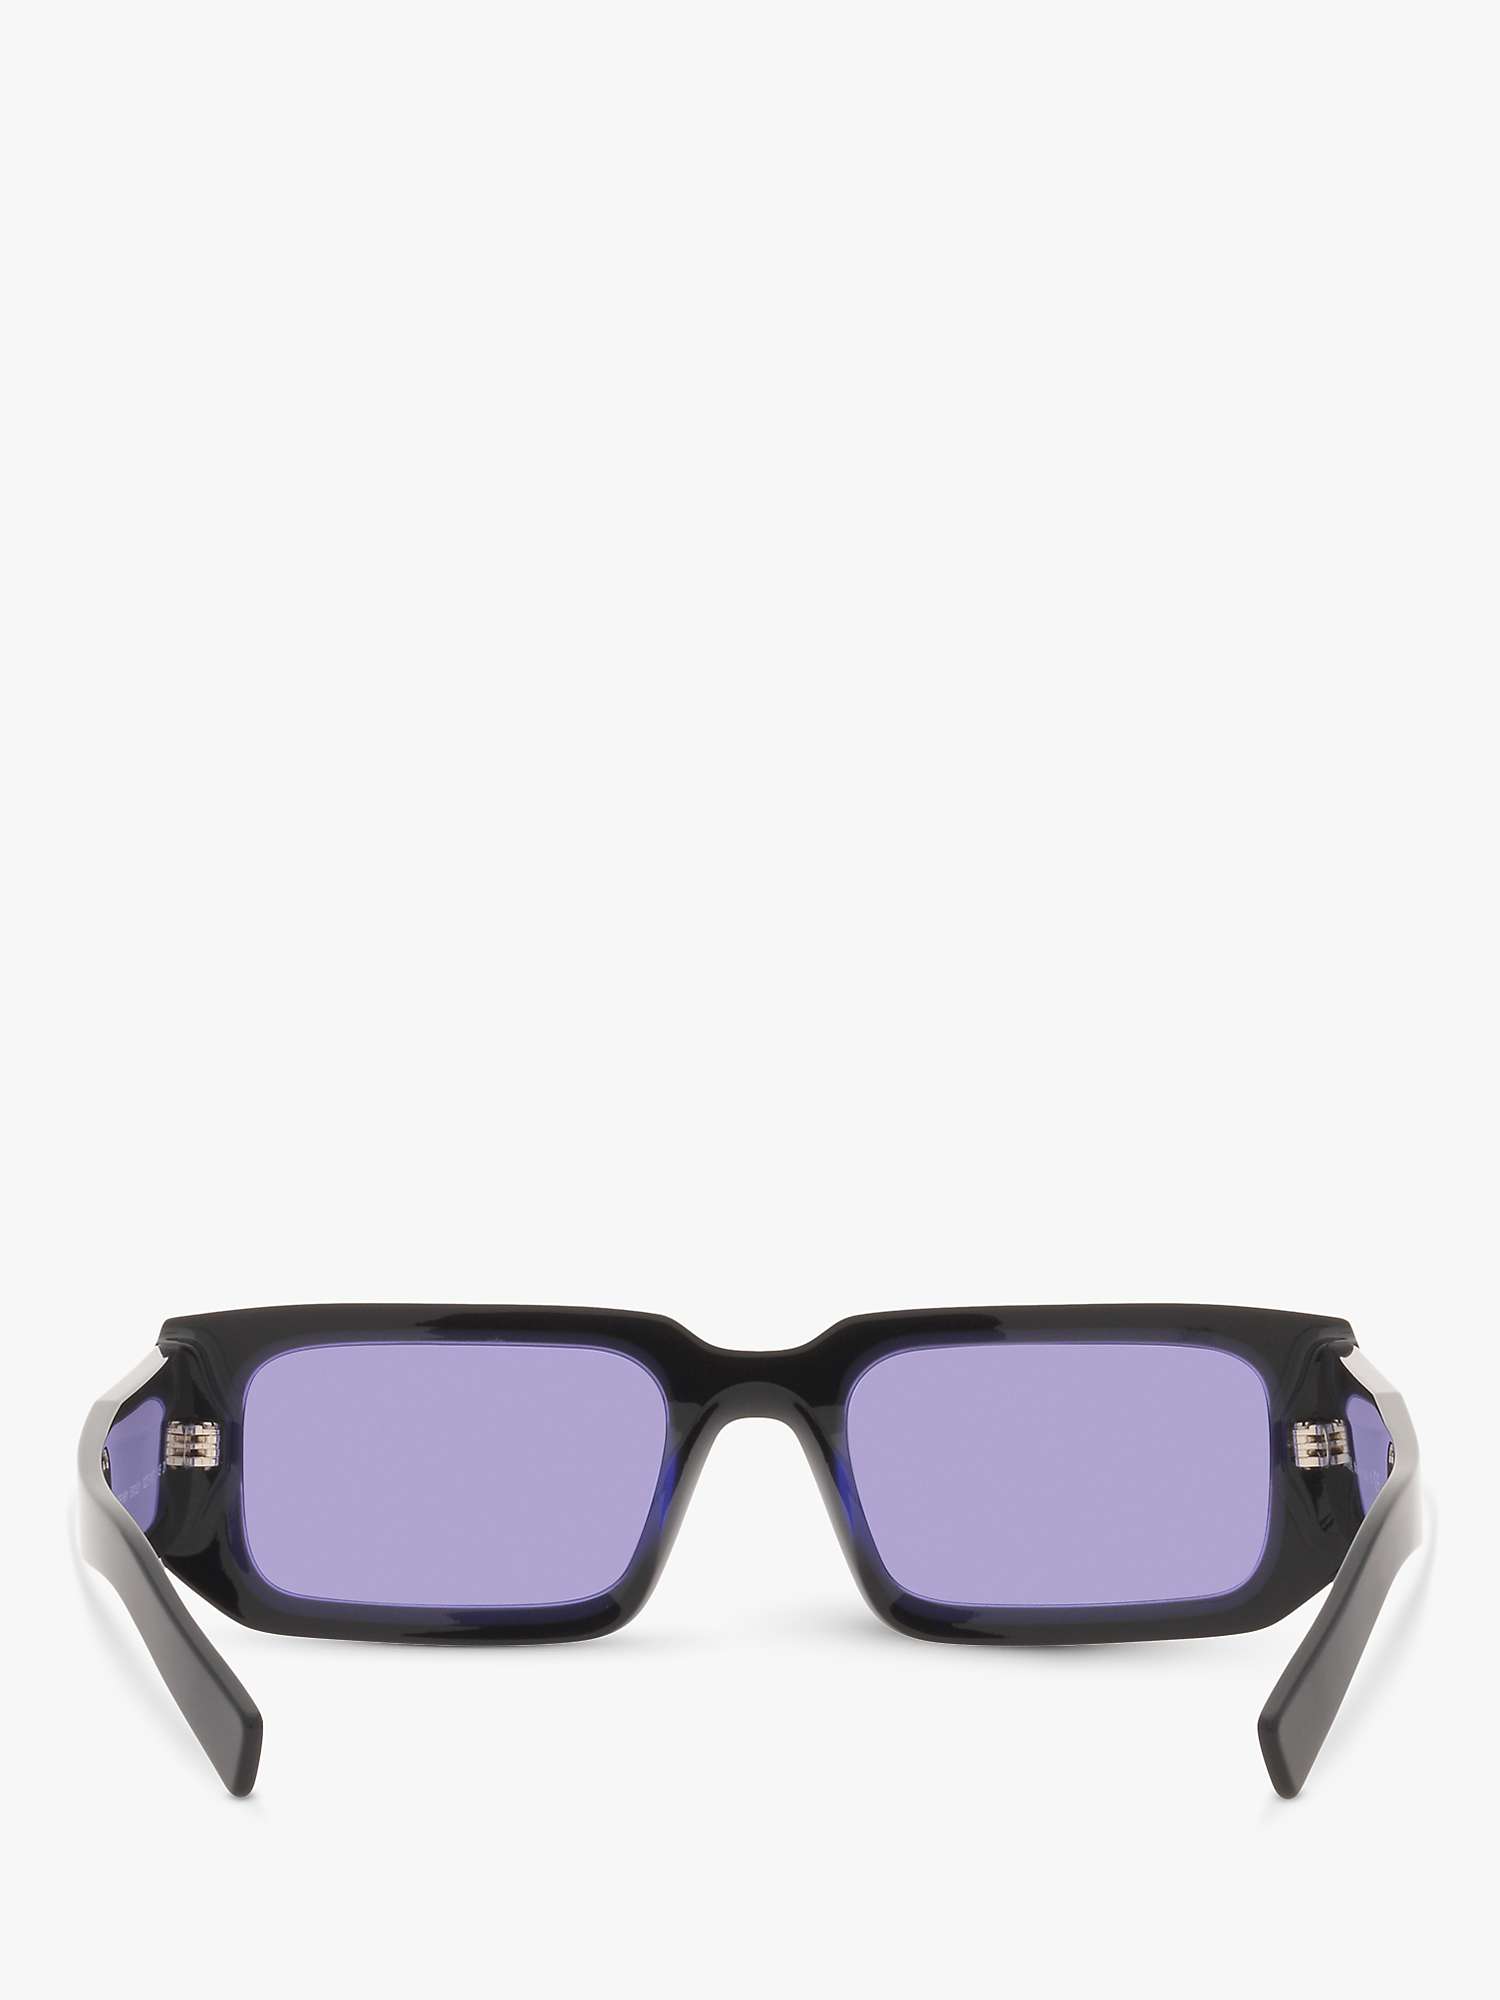 Buy Prada PR 06YS Men's Rectangular Sunglasses, Black/Purple Online at johnlewis.com